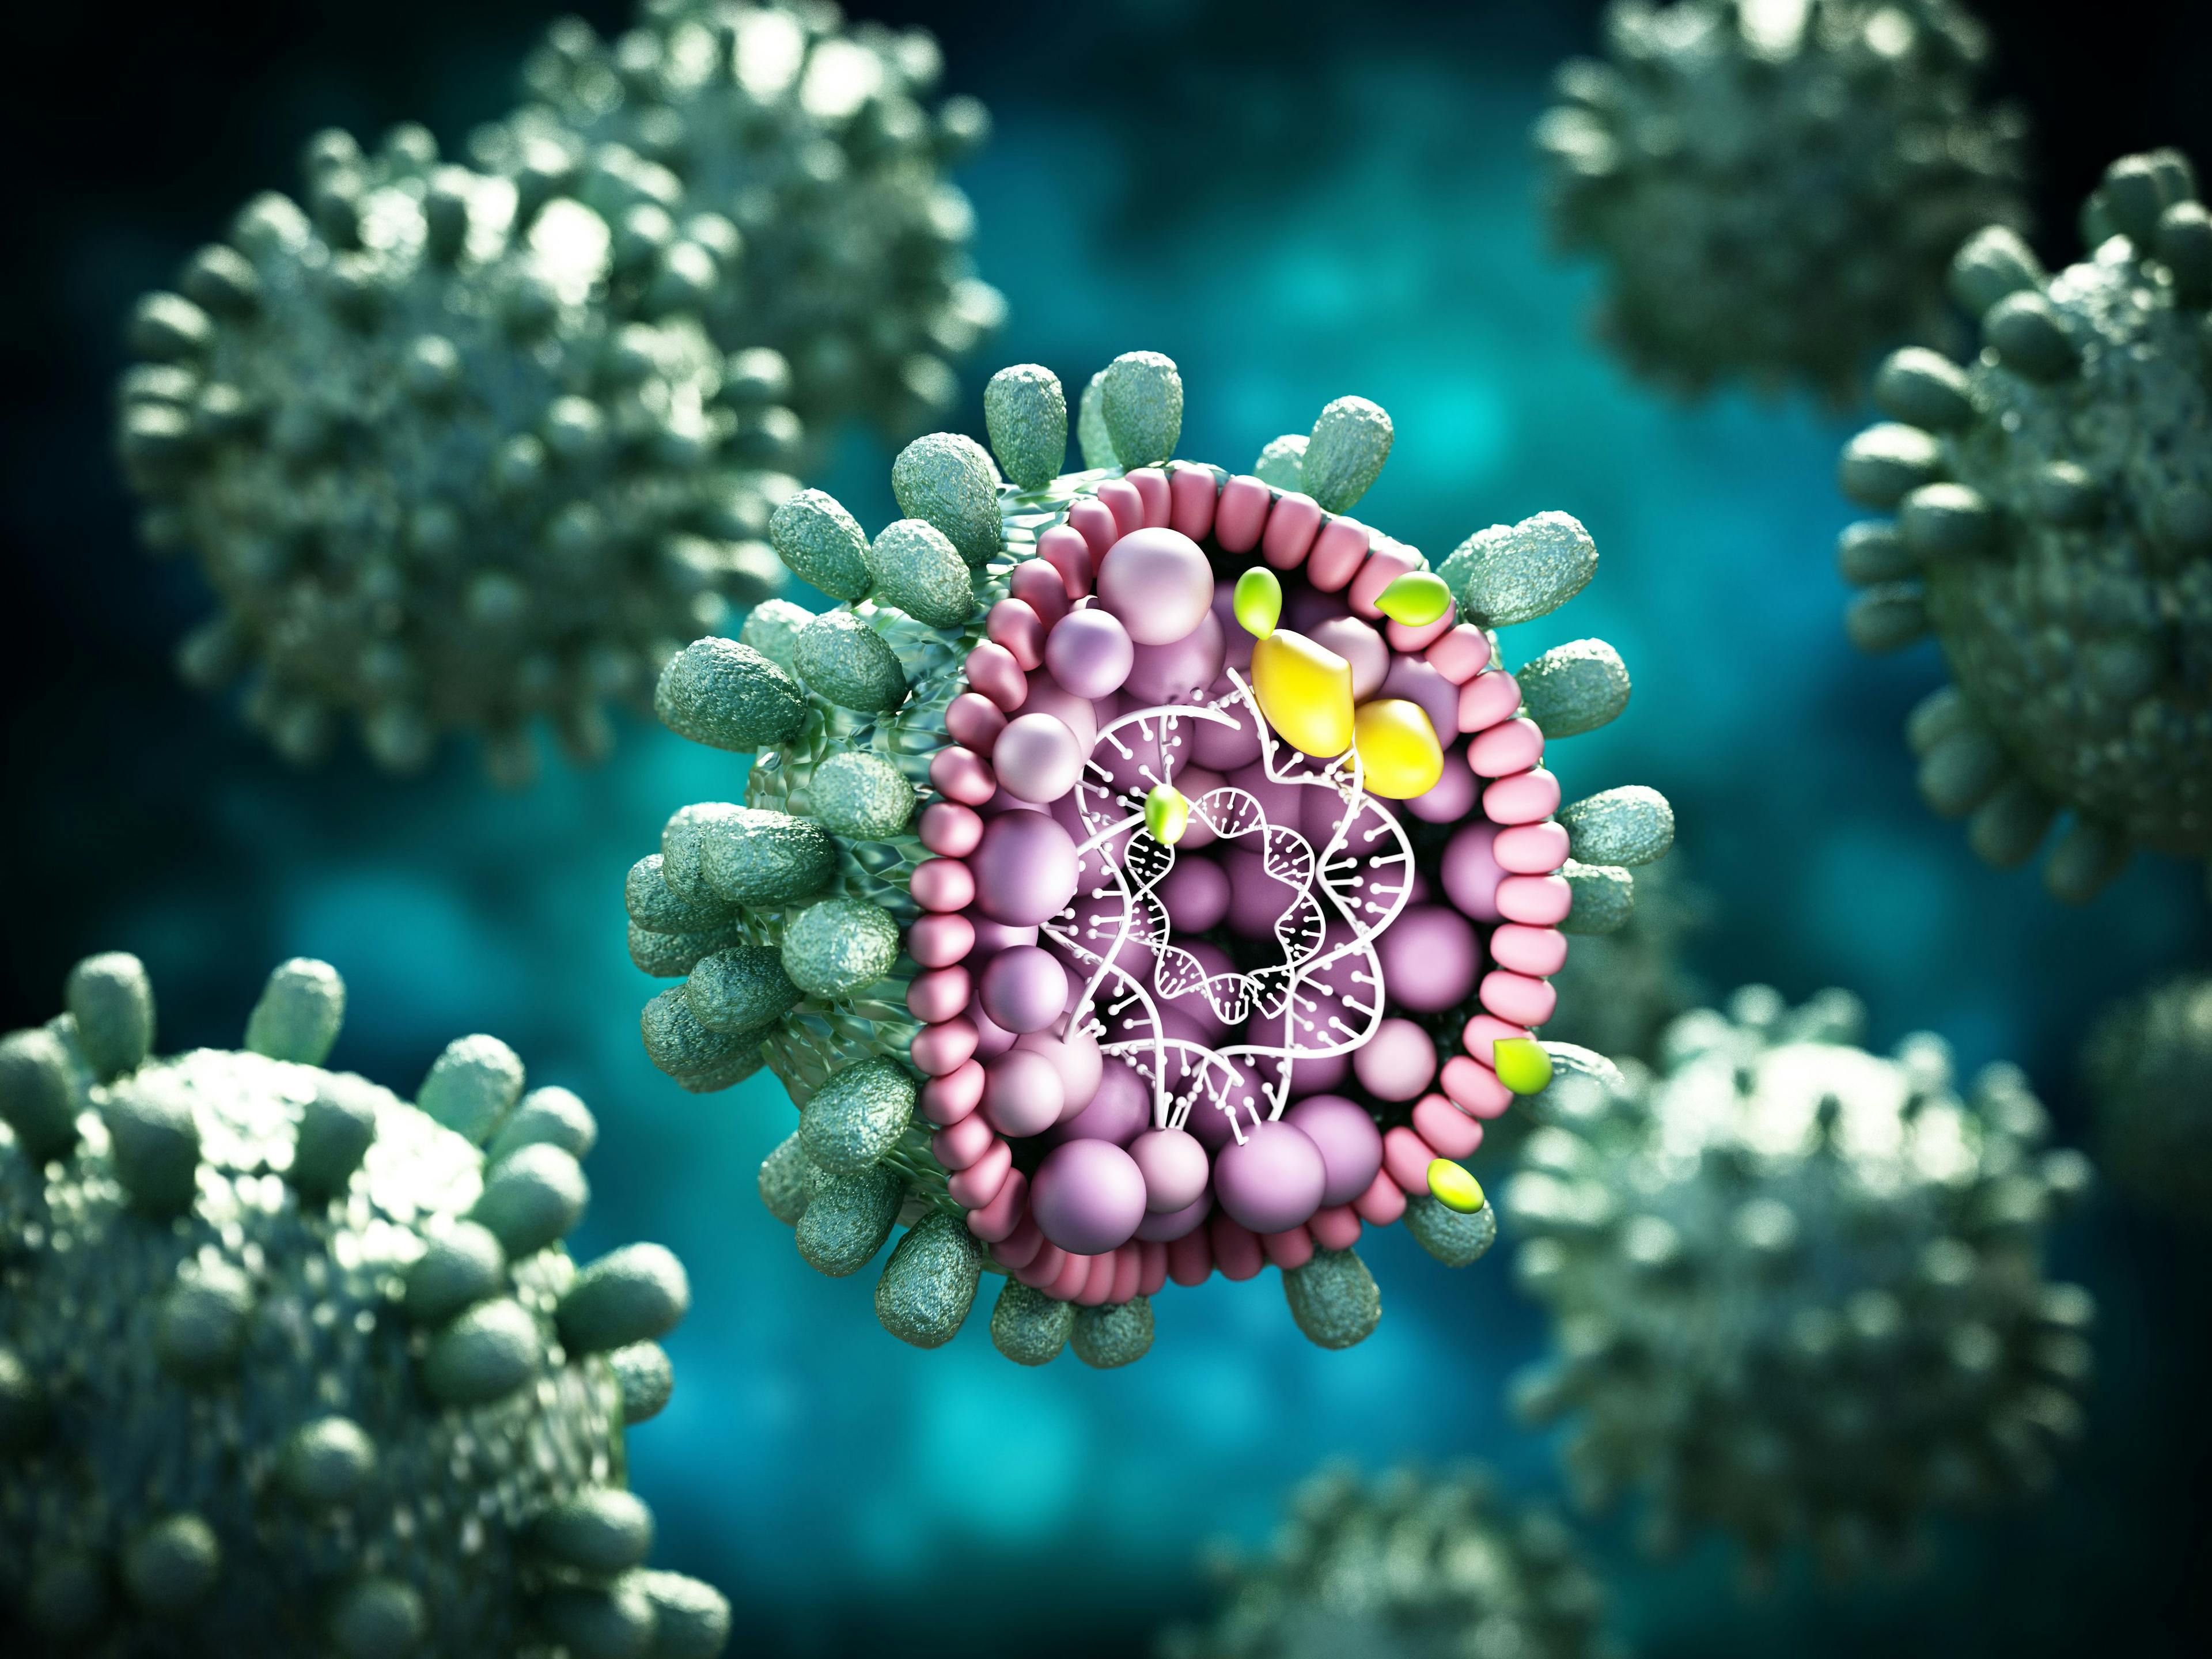 hepatitis B virus | Image Credit: Destina - stock.adobe.com